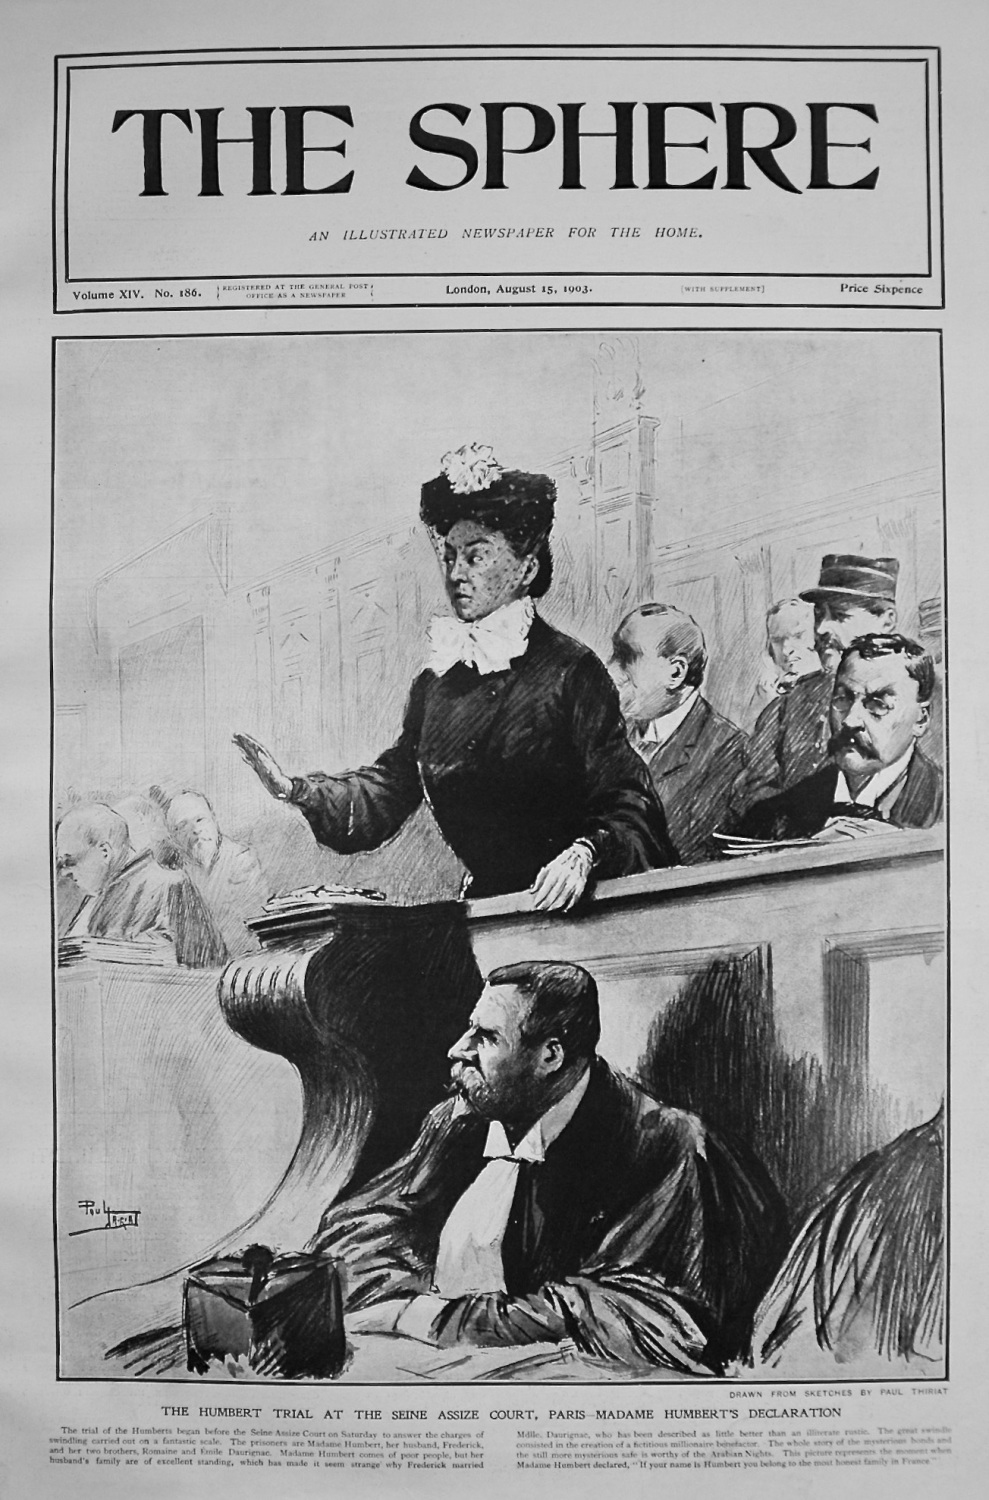 The Humbert Trial at the Seine Assize Court, Paris - Madame Humbert's Decla